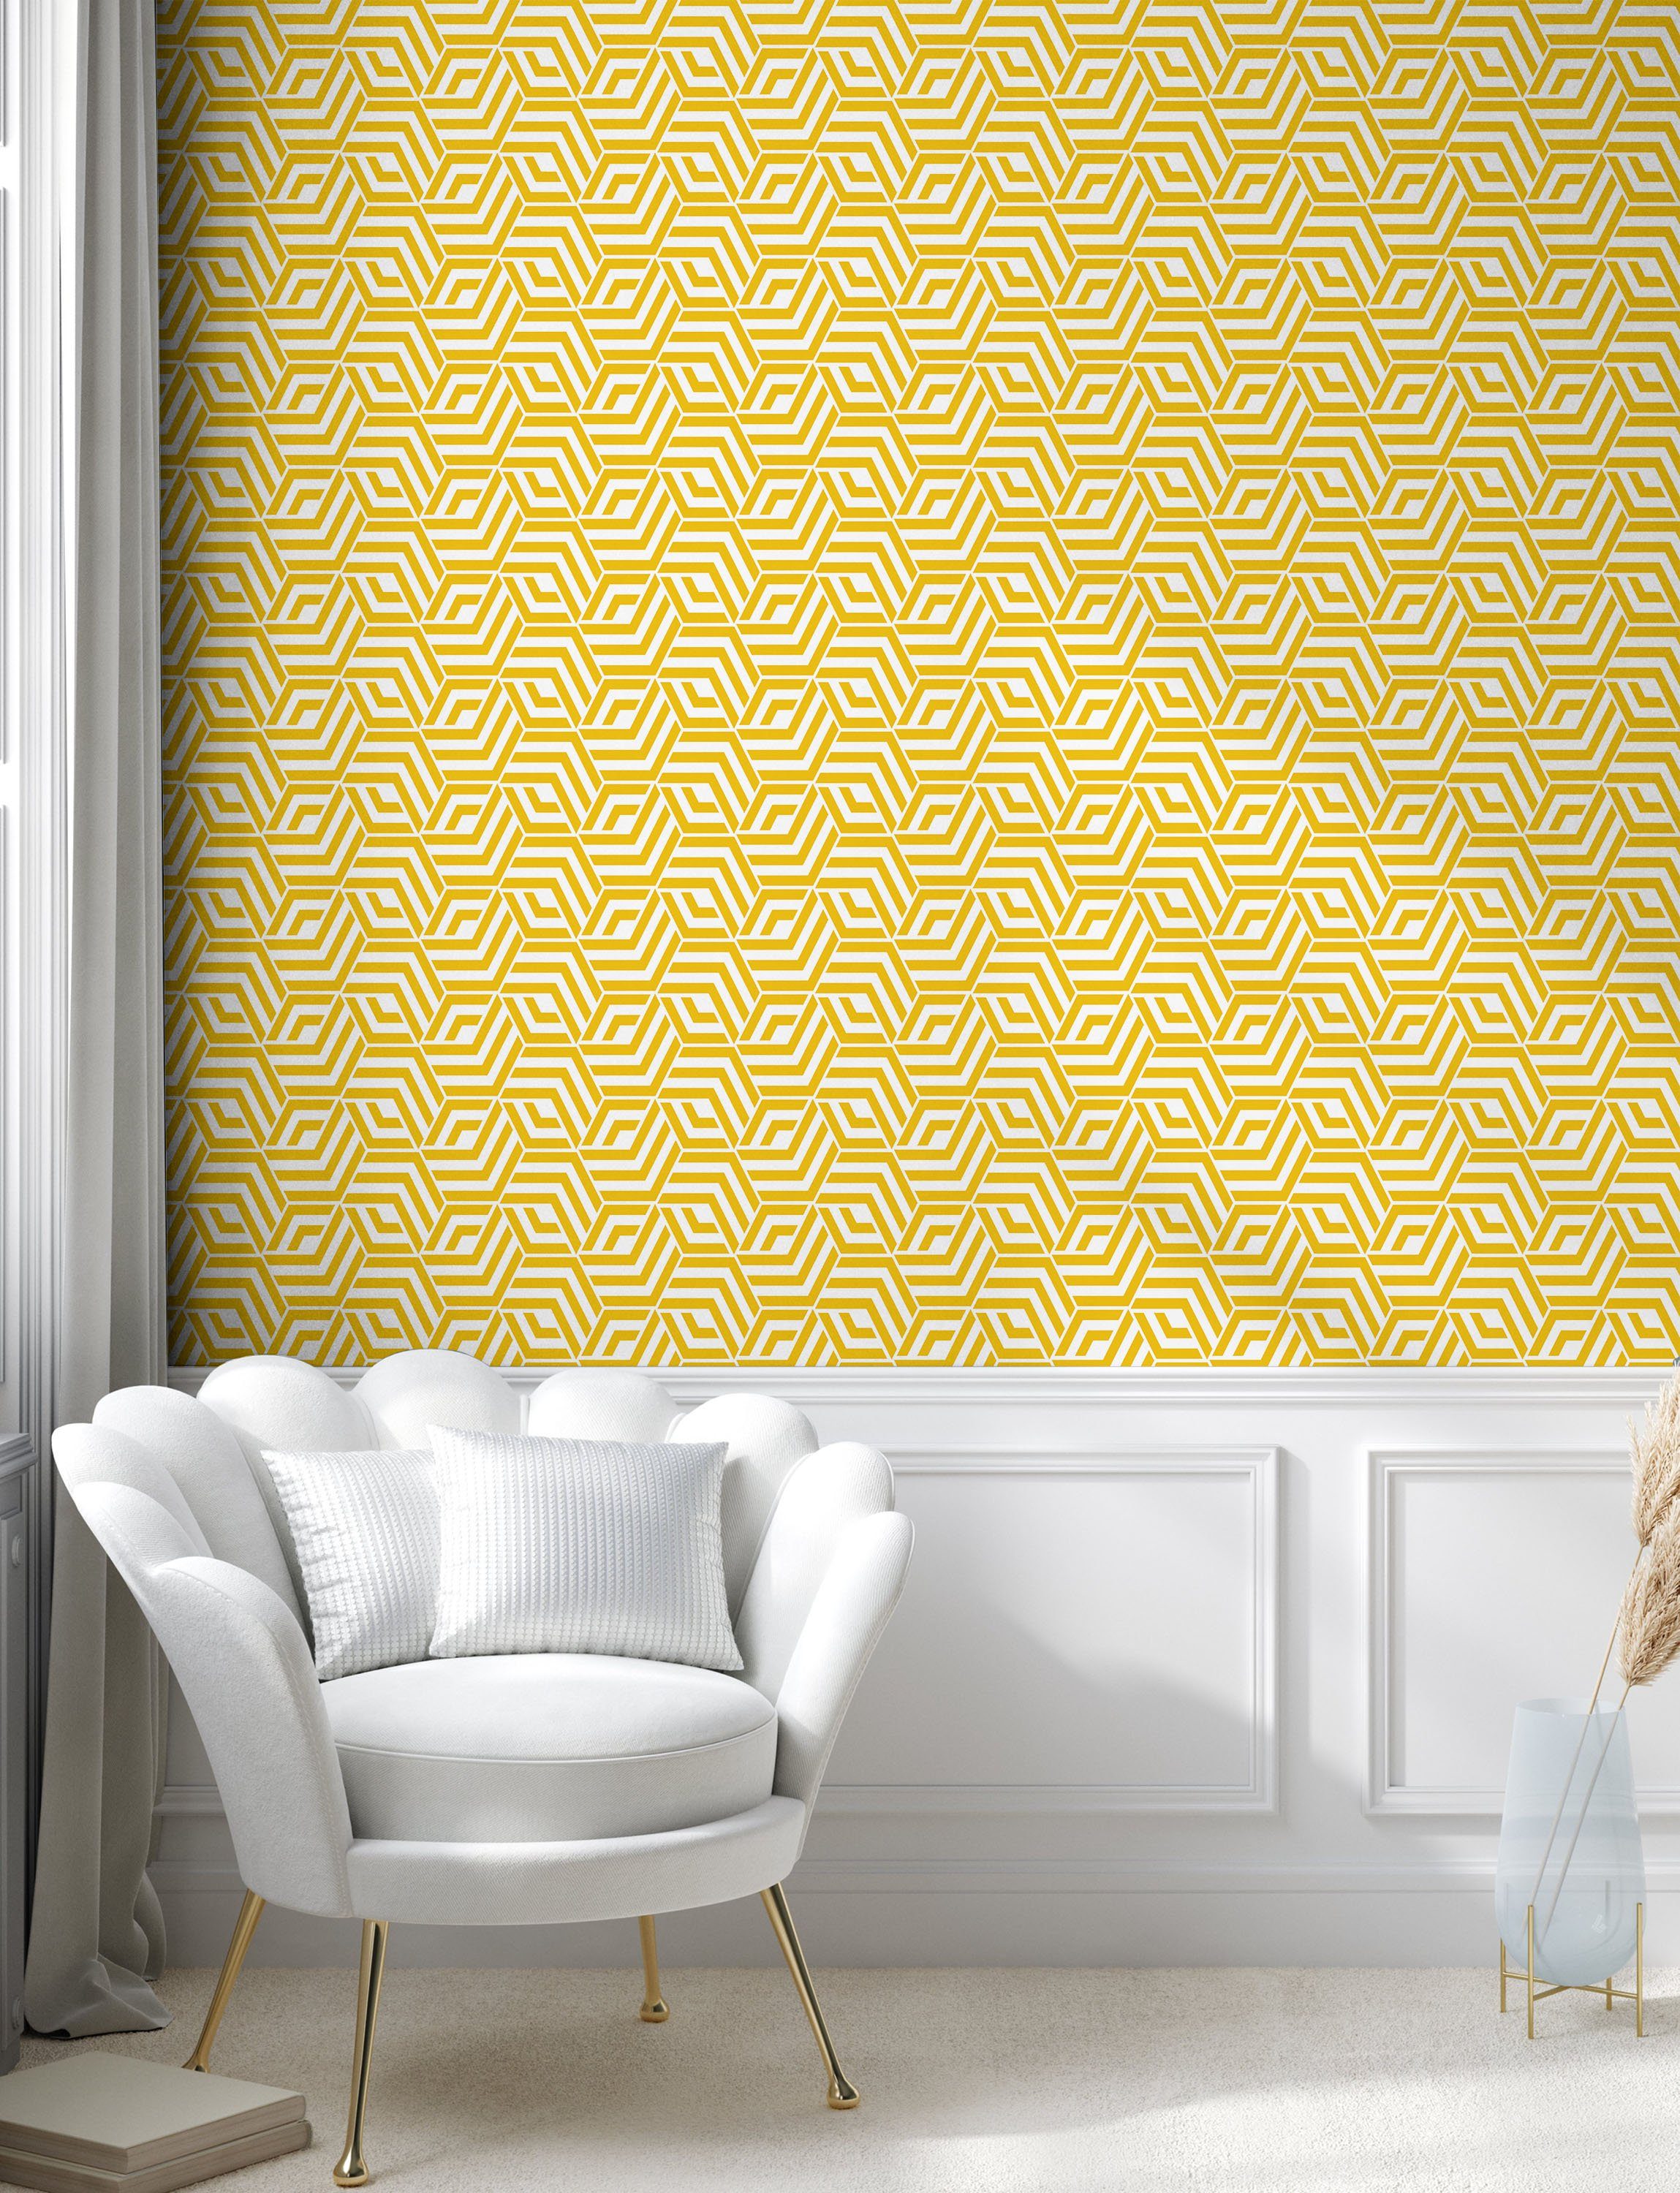 Abakuhaus Vinyltapete selbstklebendes Küchenakzent, Hexagons Wohnzimmer Yellow Chevron Gitter